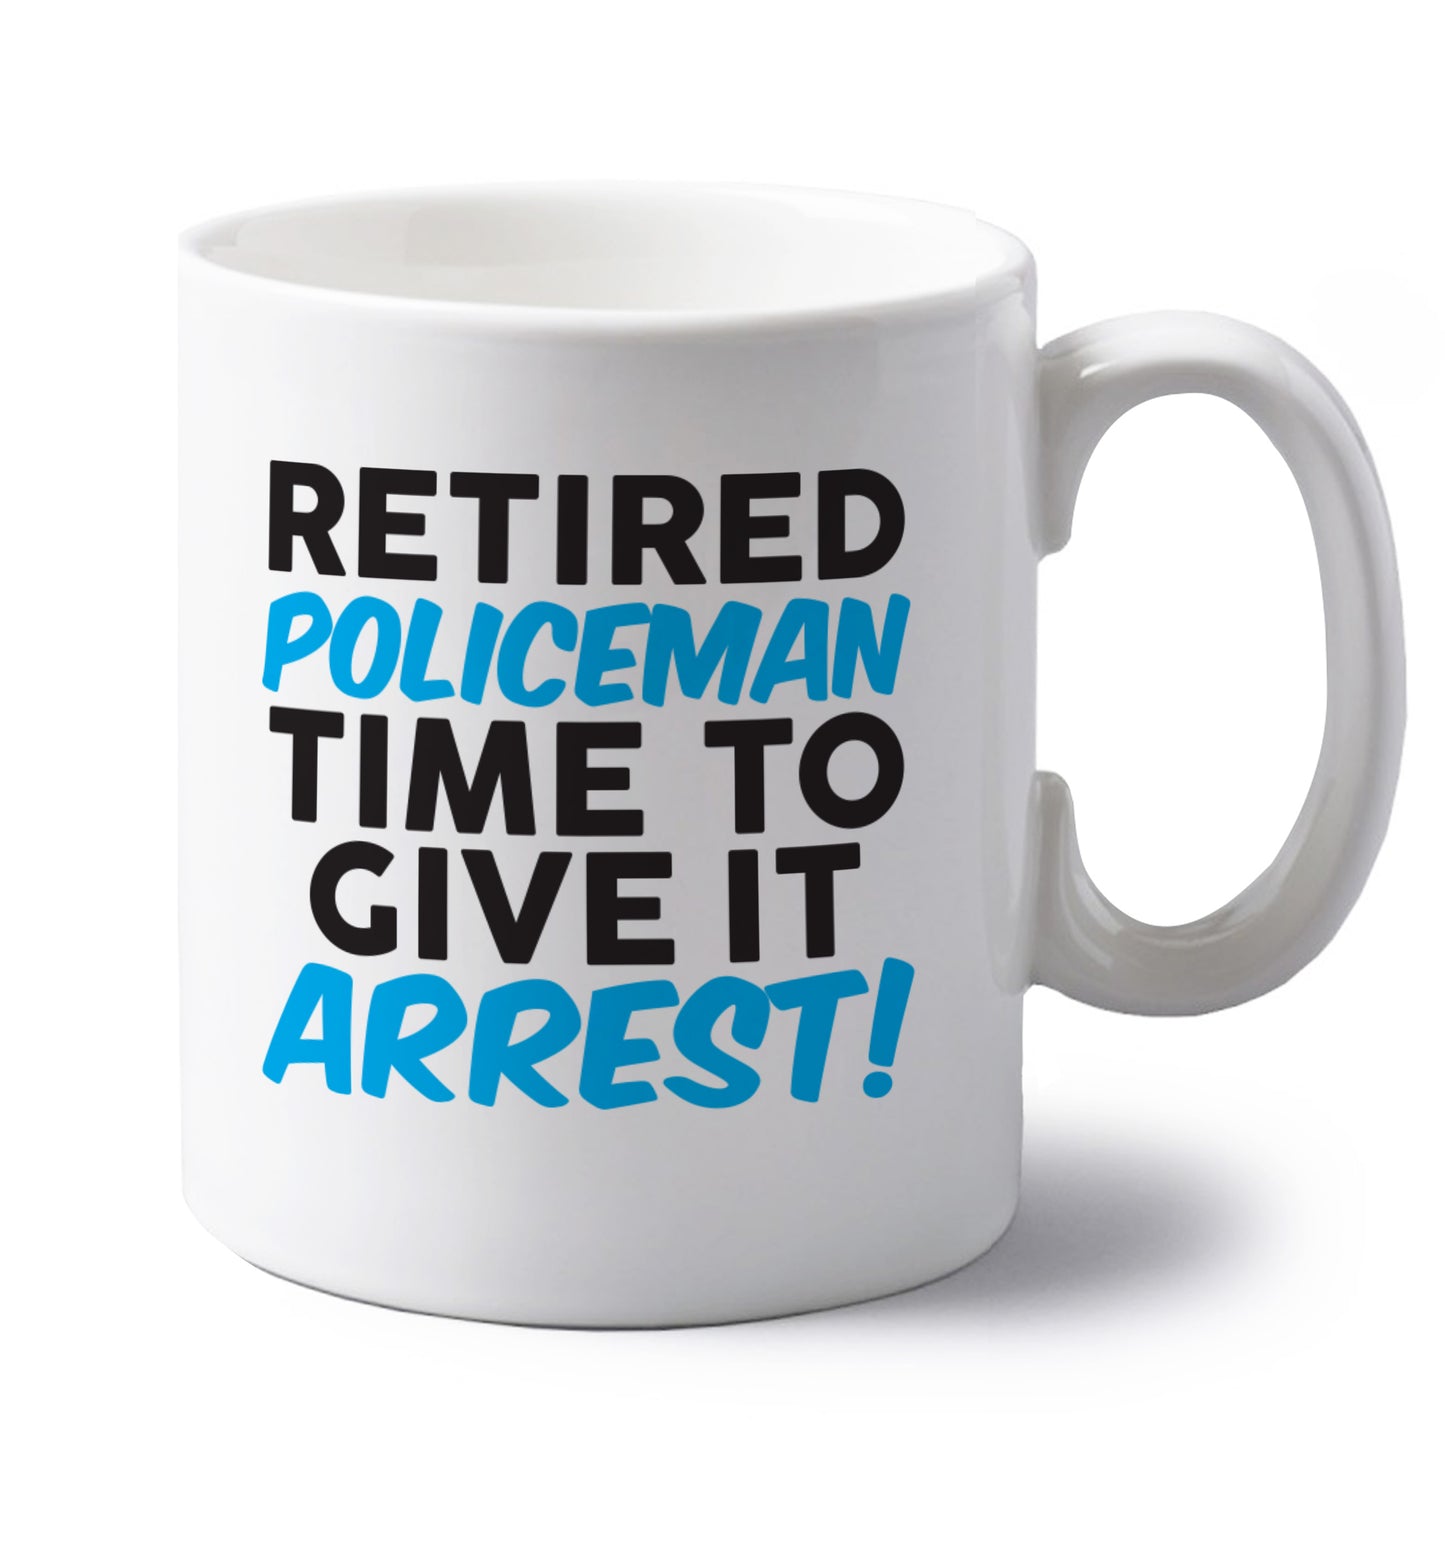 Retired policeman give it arresst! left handed white ceramic mug 